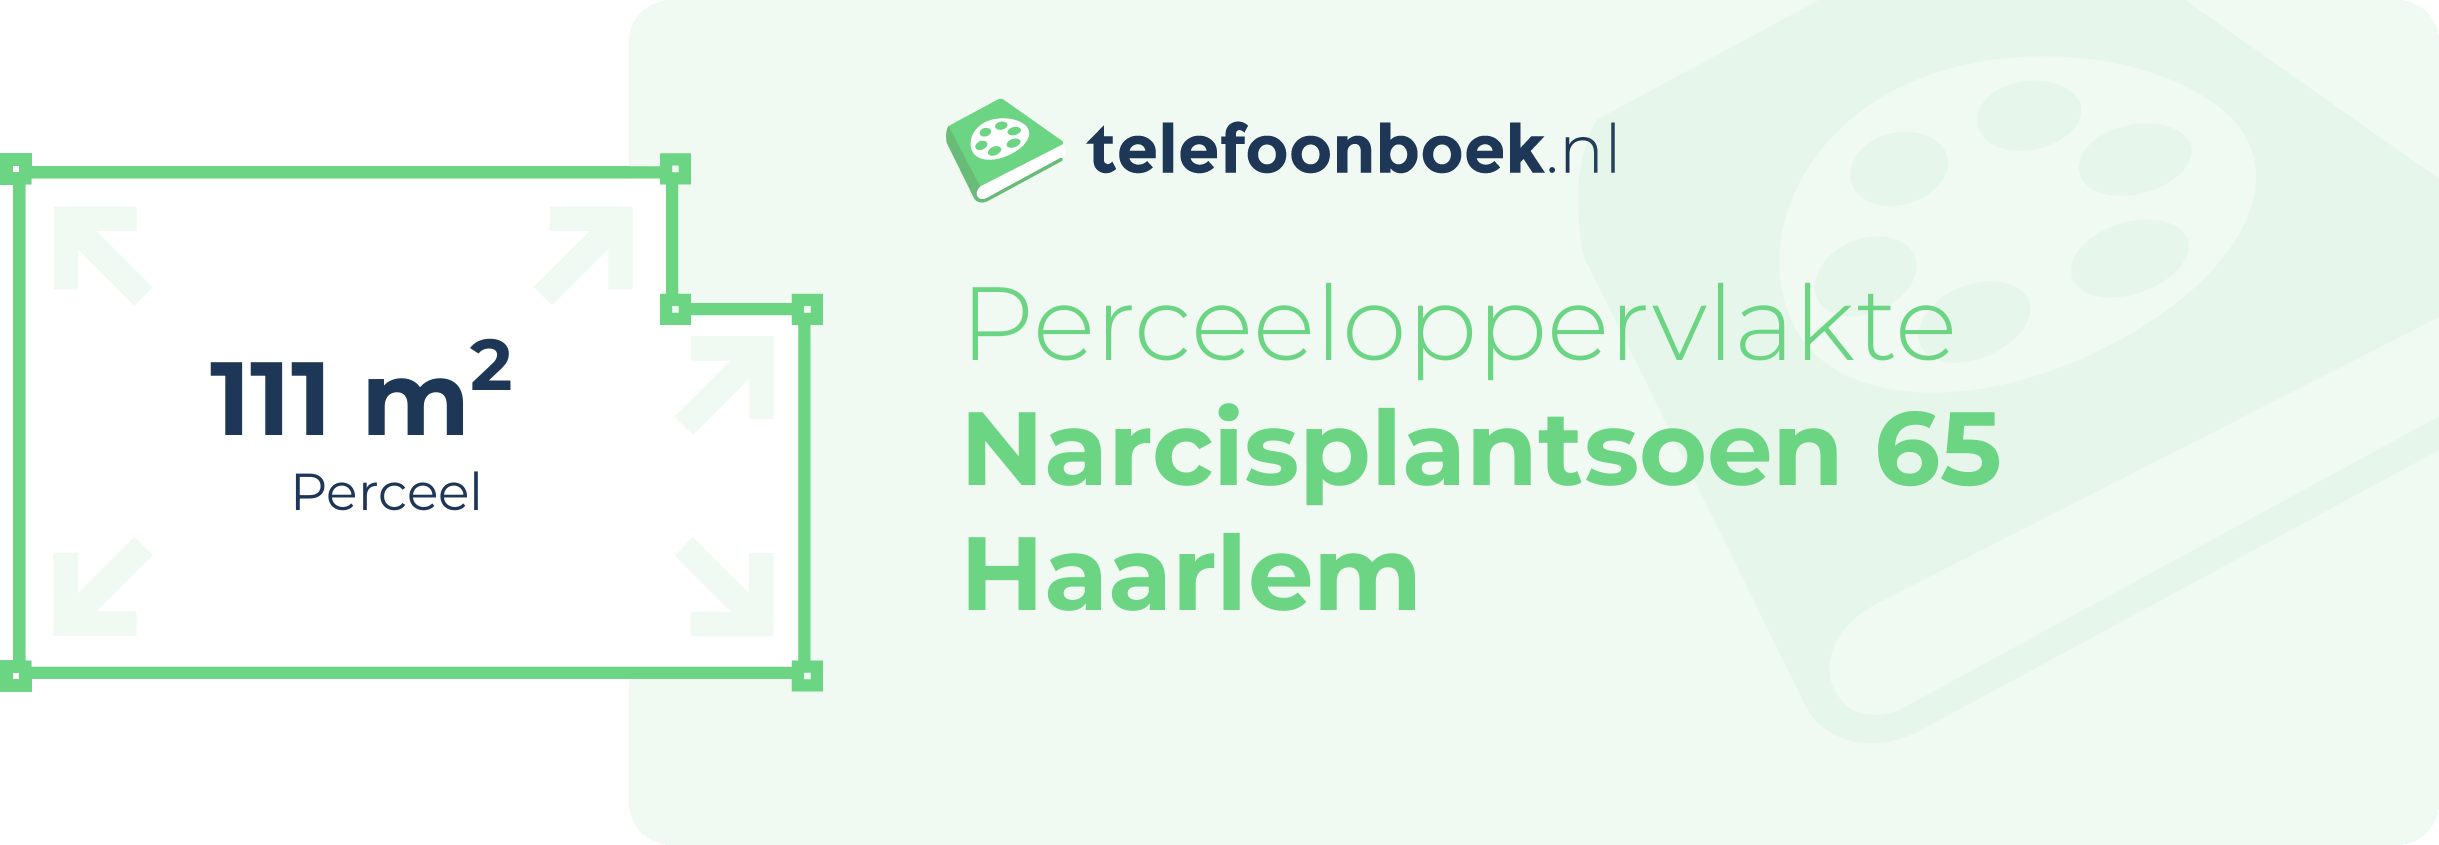 Perceeloppervlakte Narcisplantsoen 65 Haarlem